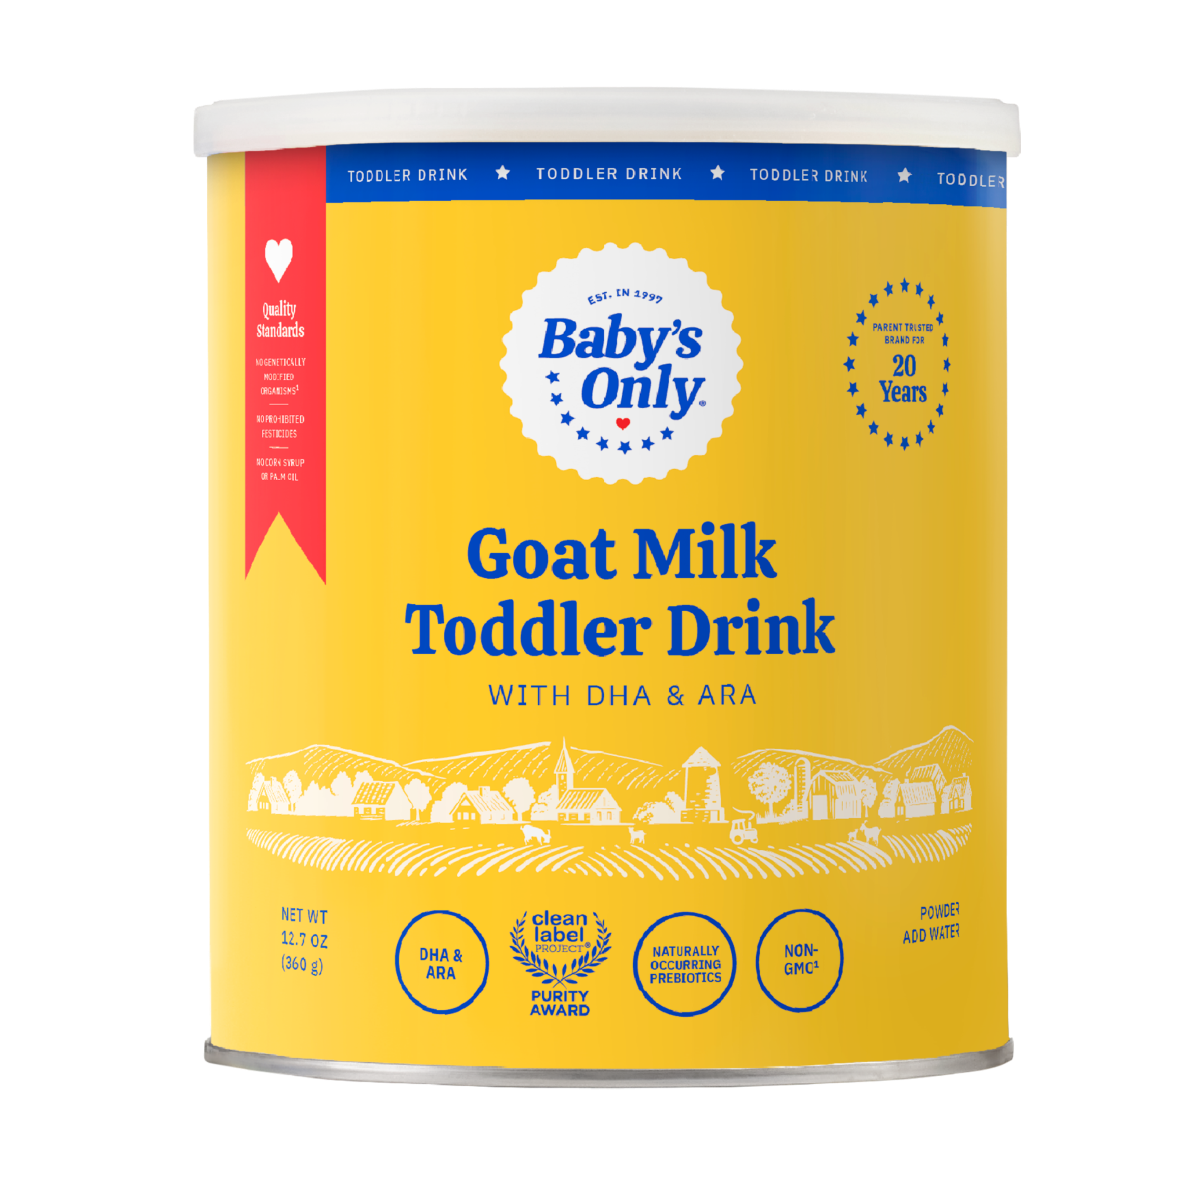 Goat Milk Toddler Drink